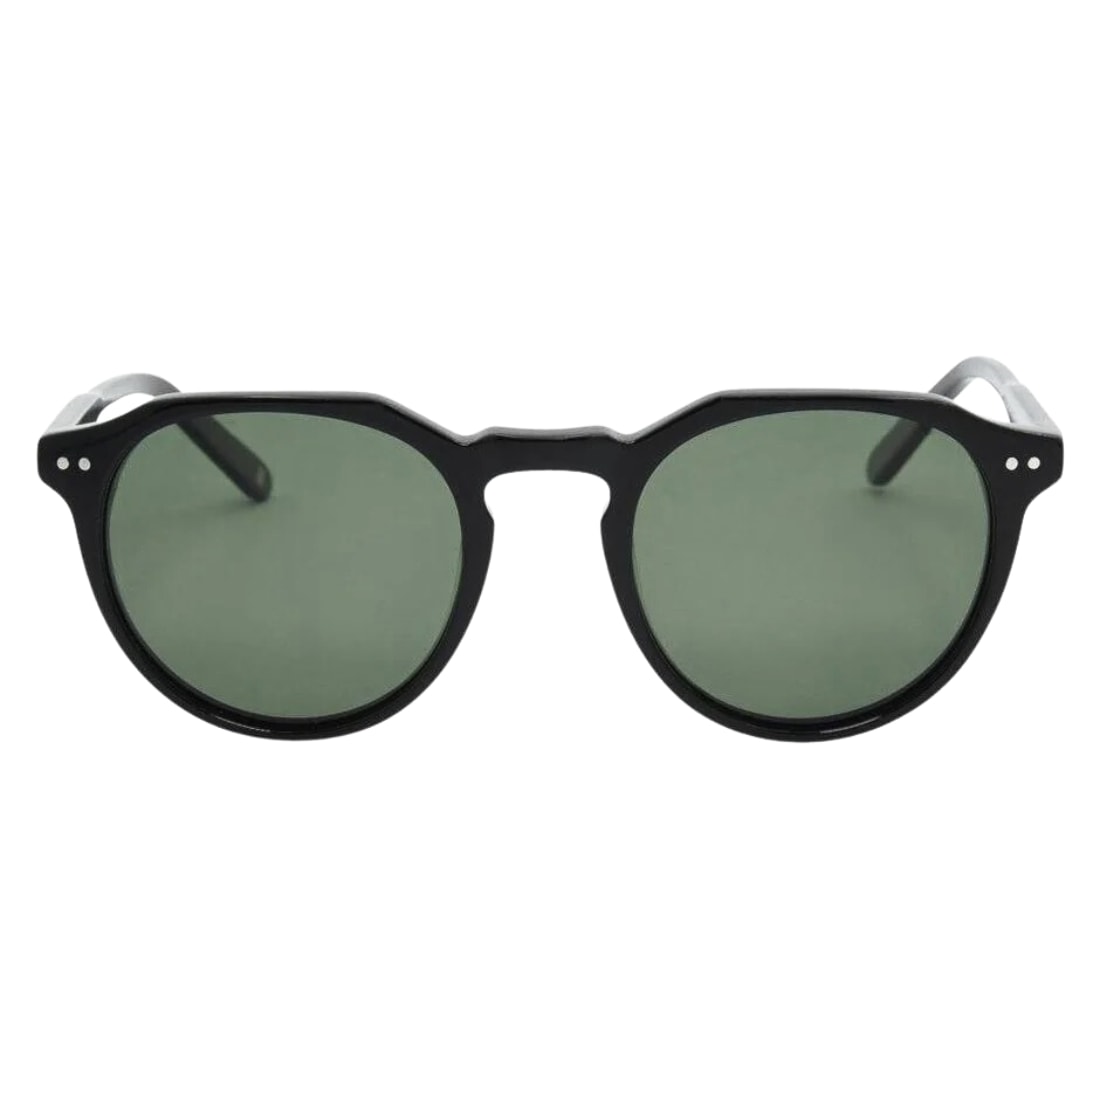 I-Sea Watty Round Polarised Sunglasses - Black Acetate/Green Polarized Lens - Round Sunglasses by I-Sea